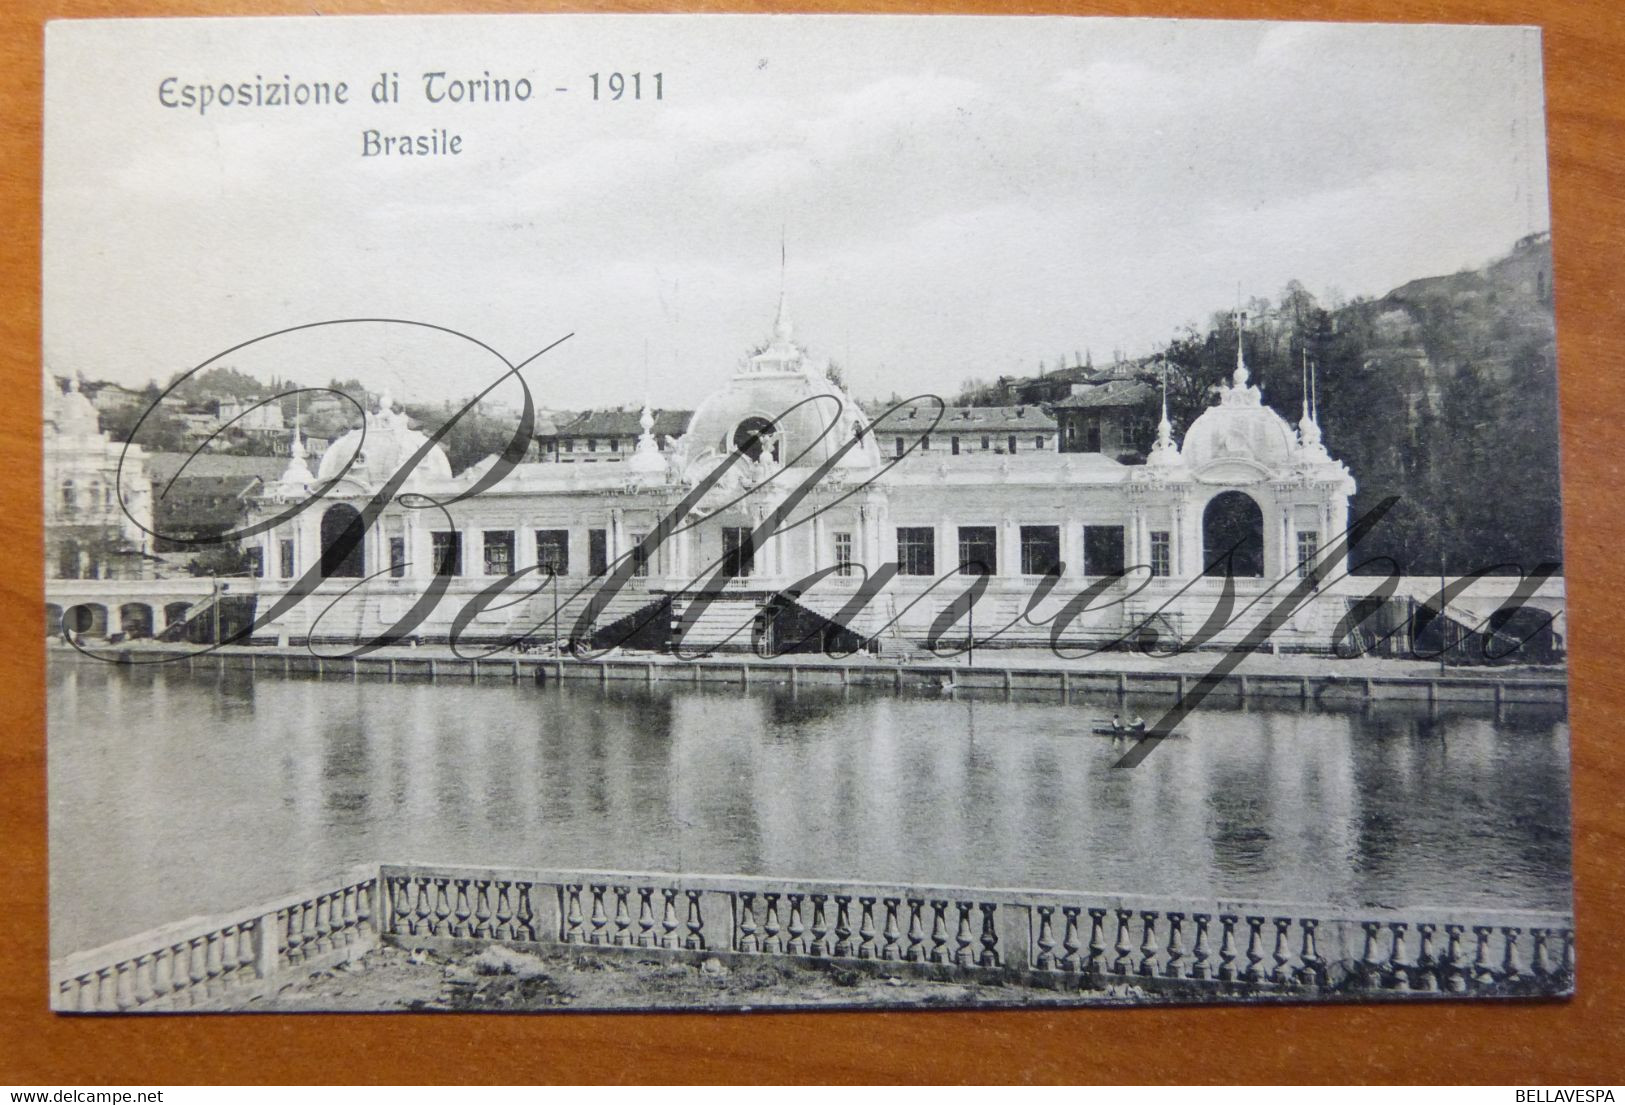 Torino. Espositione Exposition. 1911 Bresil Brasile. N° 13274 - Exhibitions